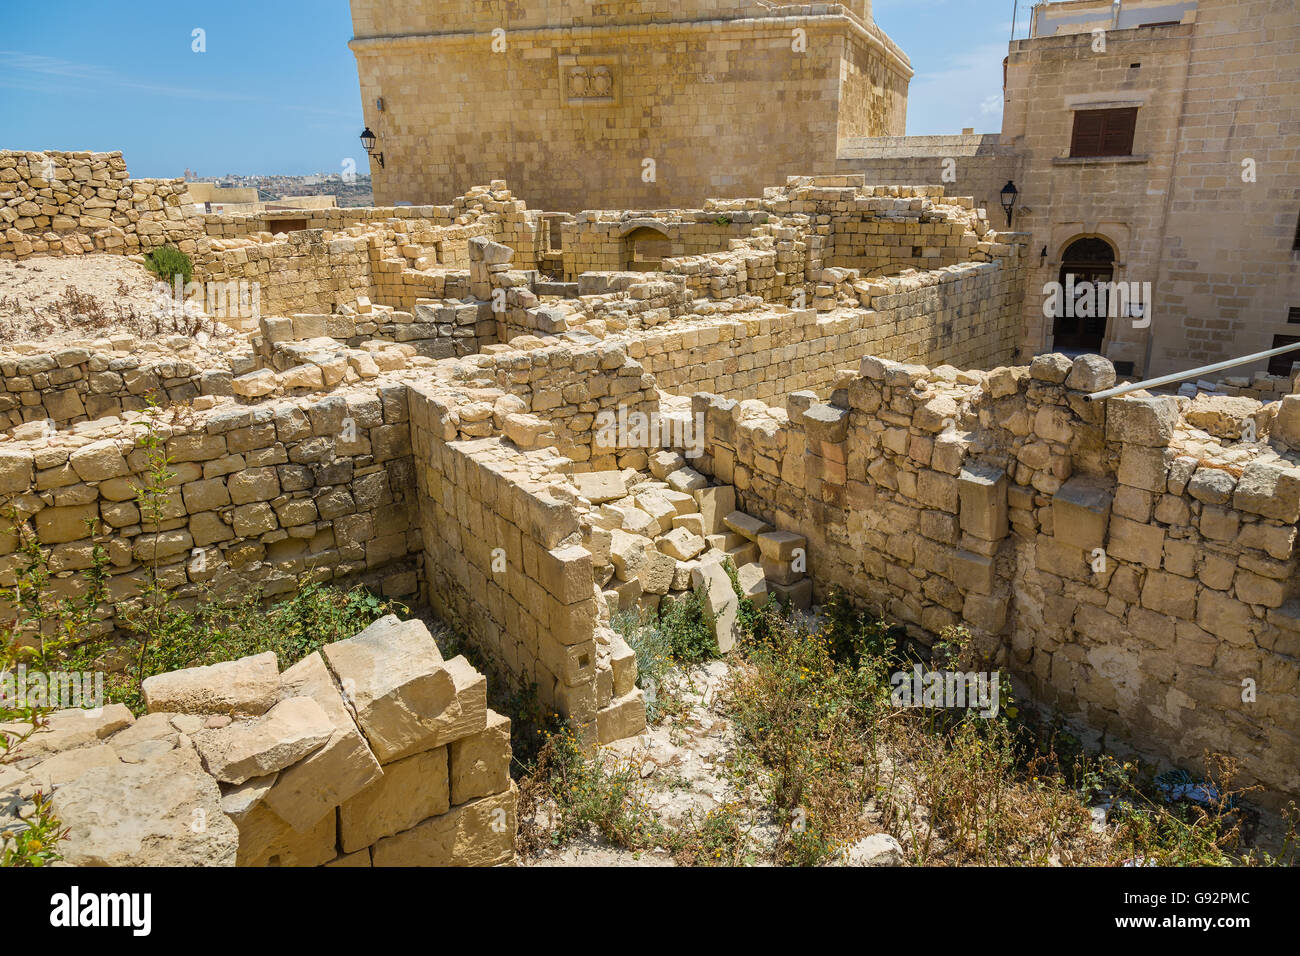 IR-Rabat, Victoria, Ghawdex - Hauptstadt der Insel Gozo, maltesischen Inseln im Mittelmeer Stockfoto